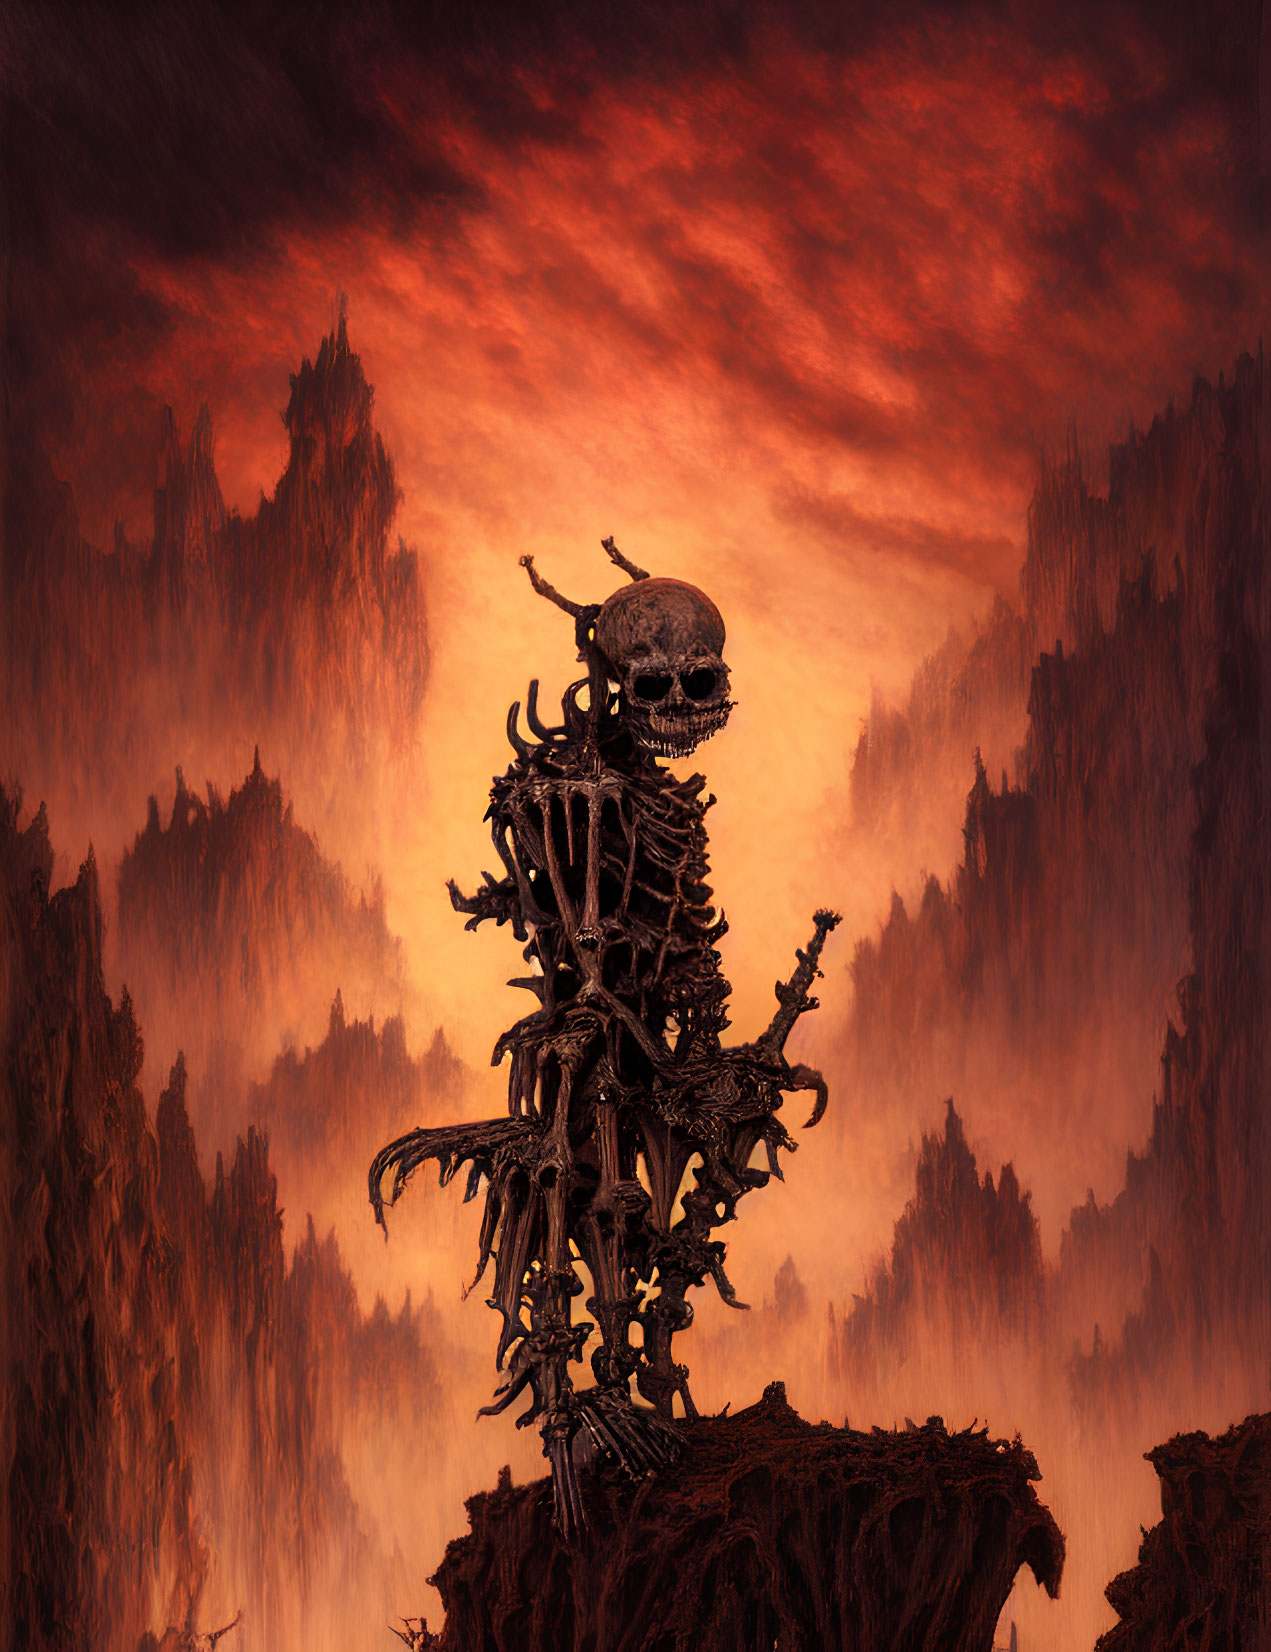 Skeletal figure on rocky outcrop in red skies landscape